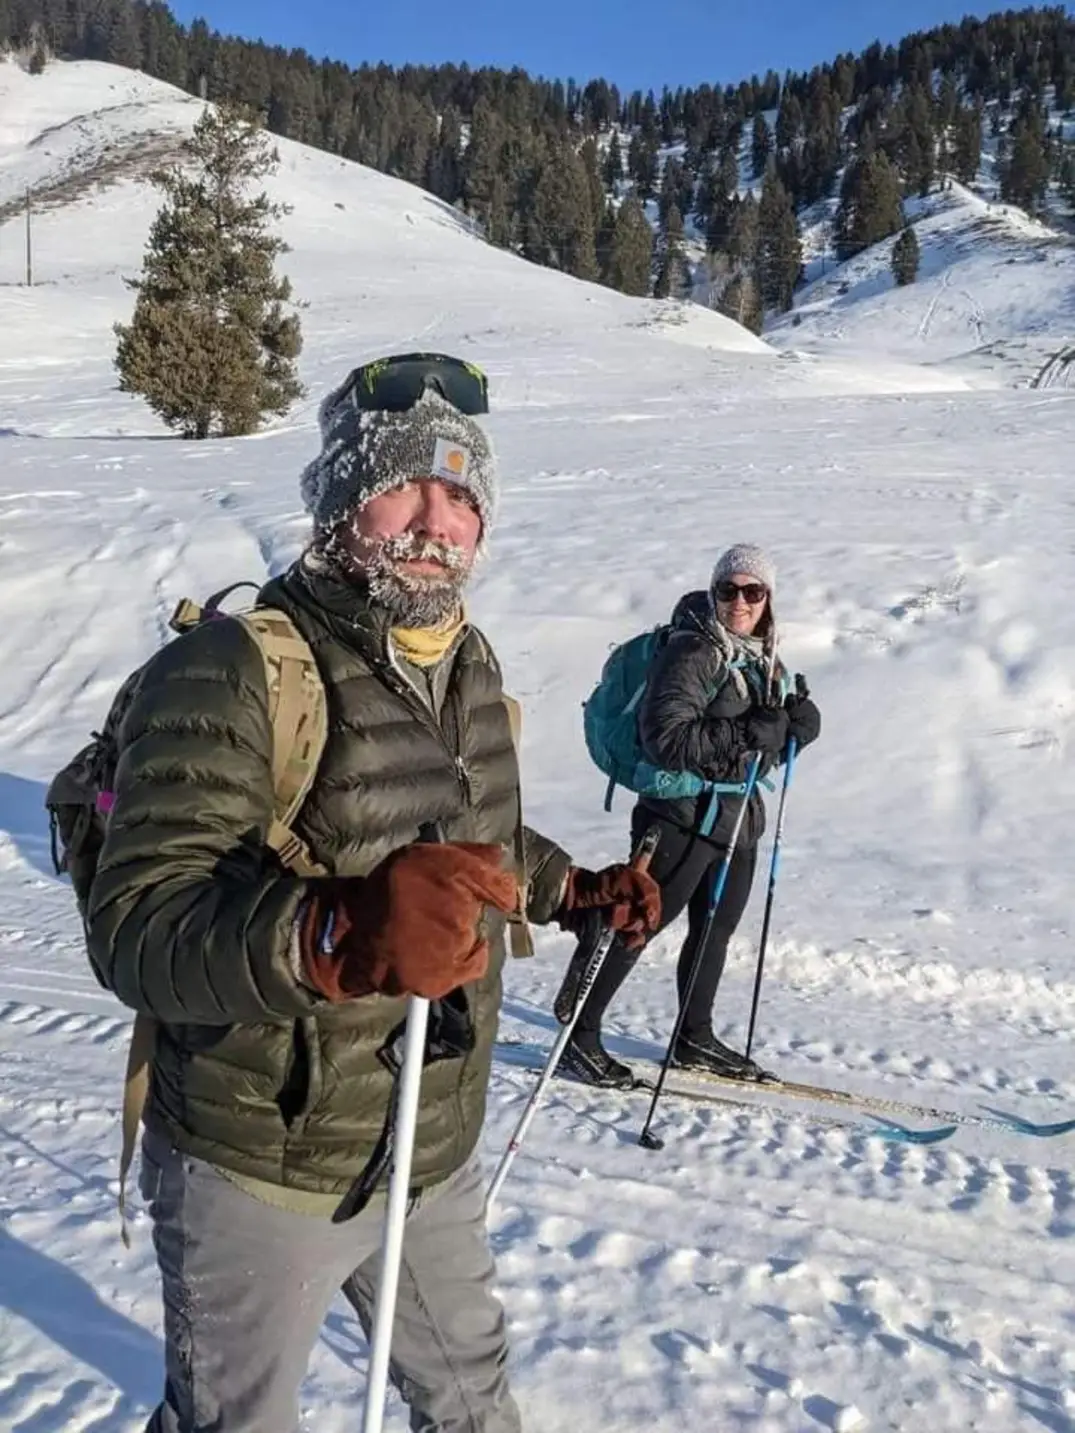 Dan Lehman skiing on a snowy mountain